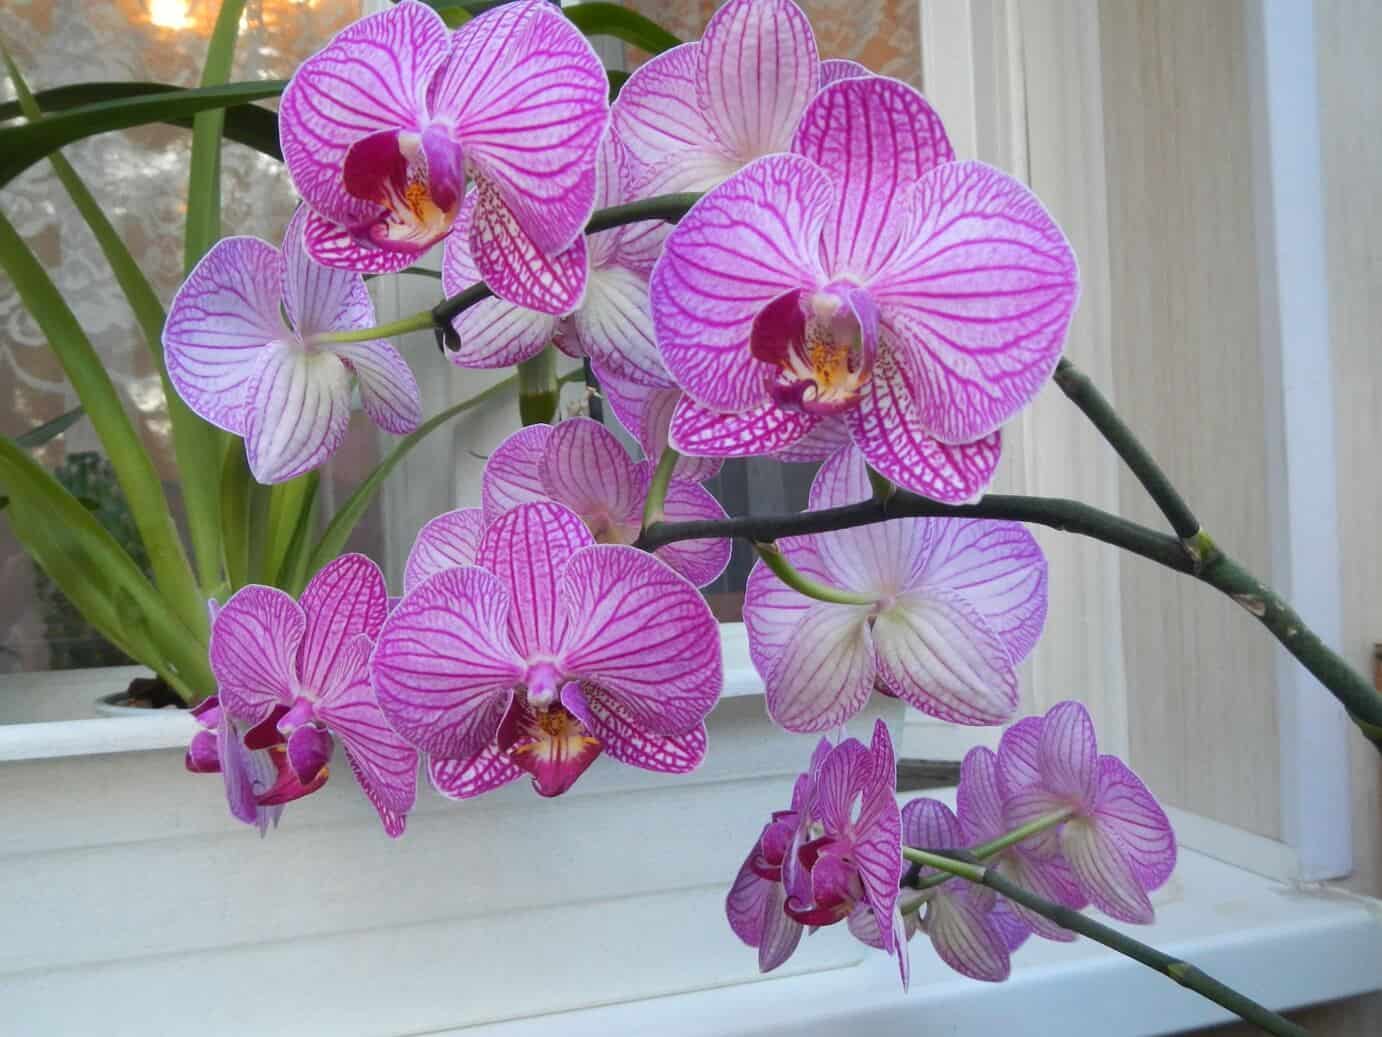 Выращивание фаленопсиса – условия и технология размножения орхидеи в домашних условиях, общие советы по уходу